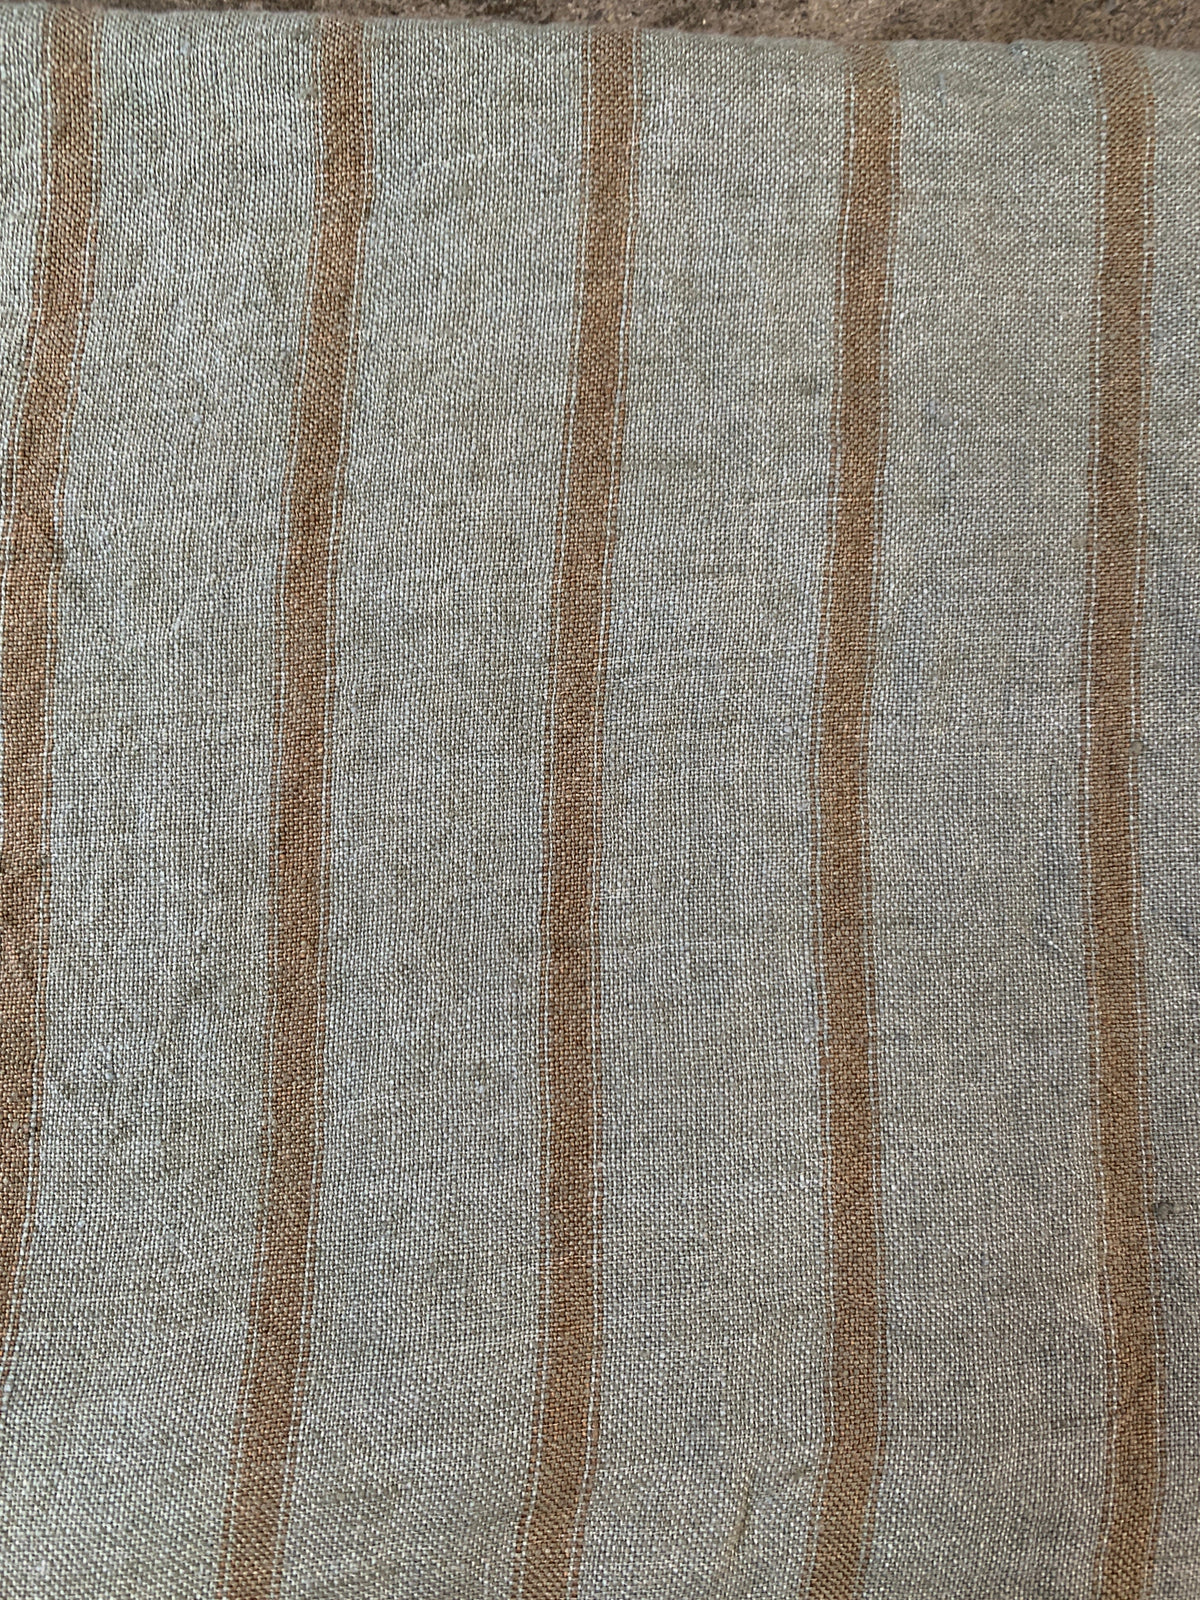 Basix Stripe Mare/Bere Linen Pillowcase